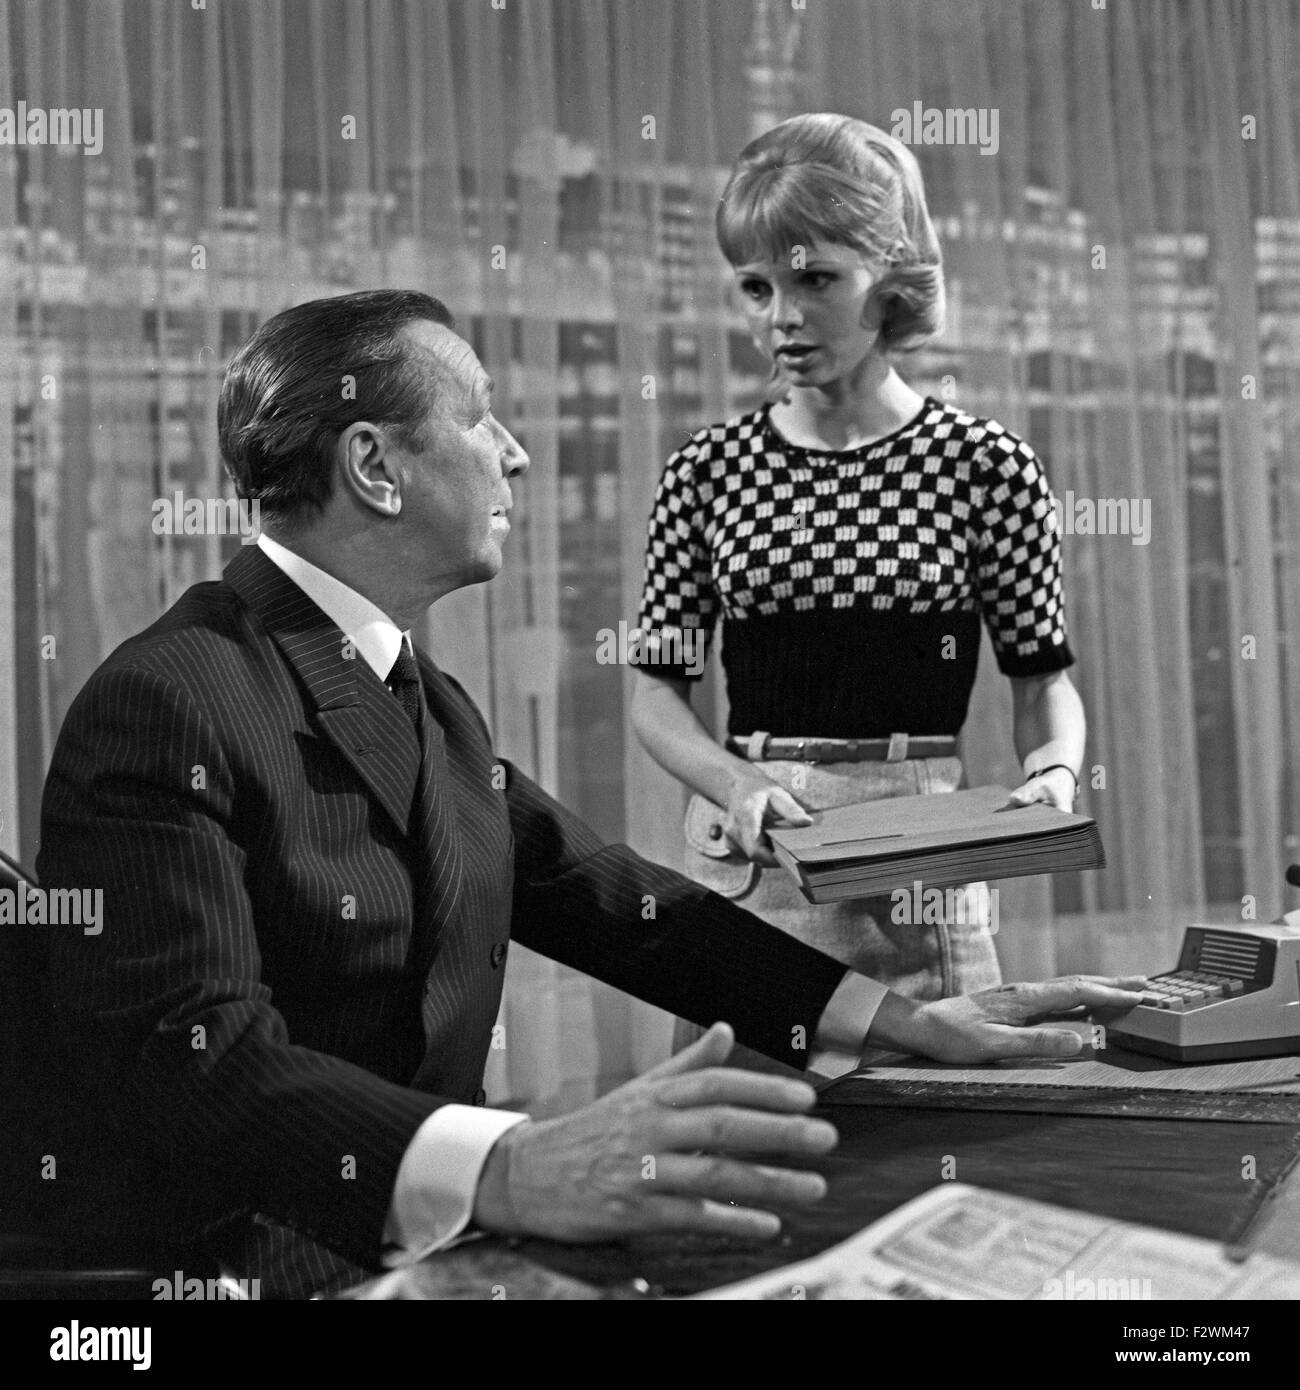 Flamingo-Club, Fernsehserie, Deutschland 1967, Szenenfoto Stock Photo